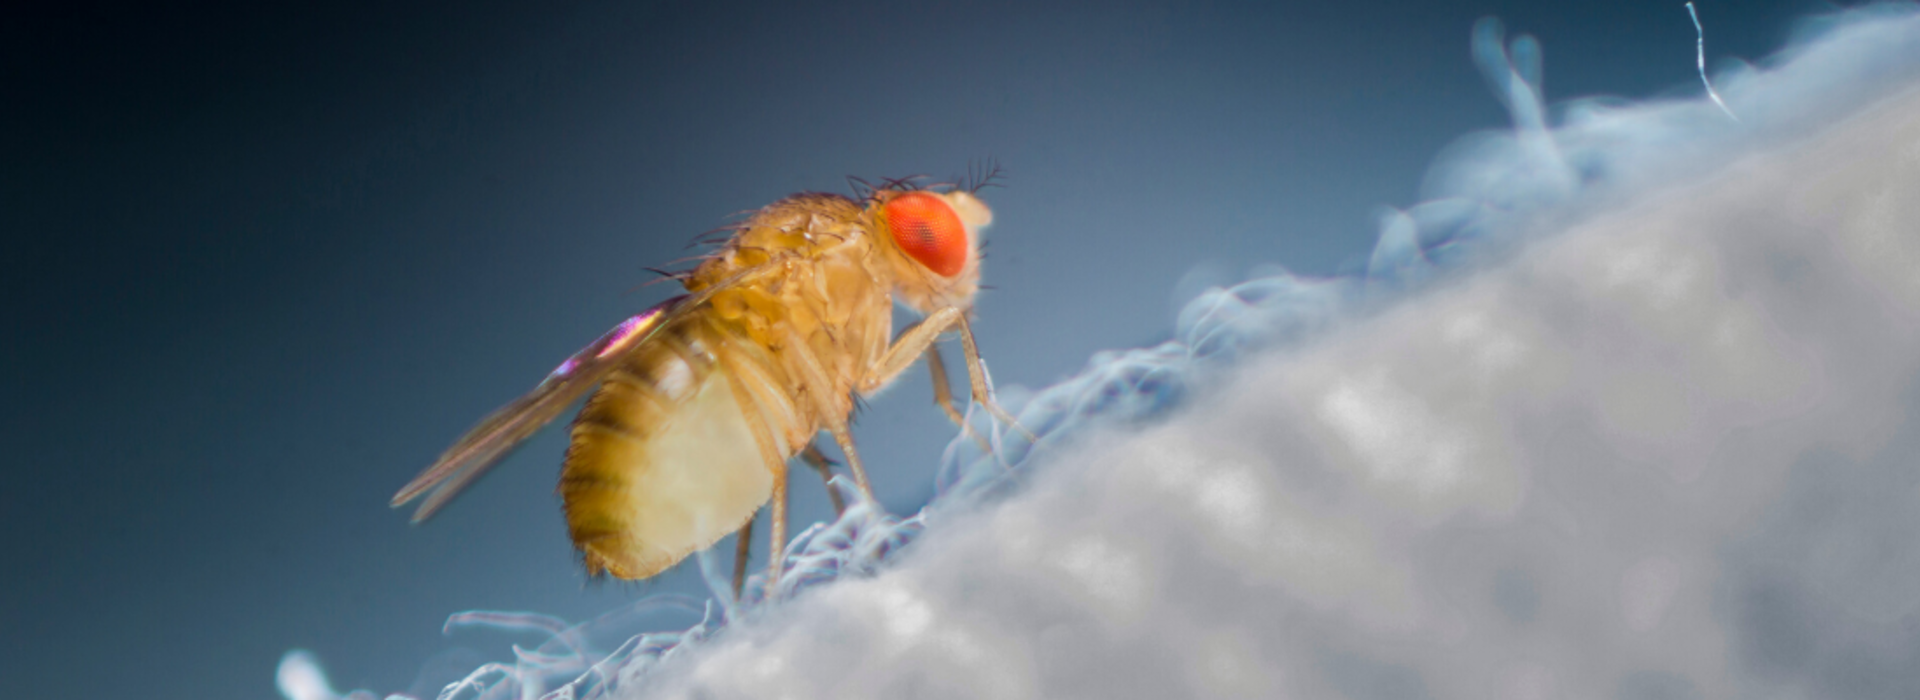 Biomedical Researchers Study Fruit Flies to Understand Human Genetic Functions 